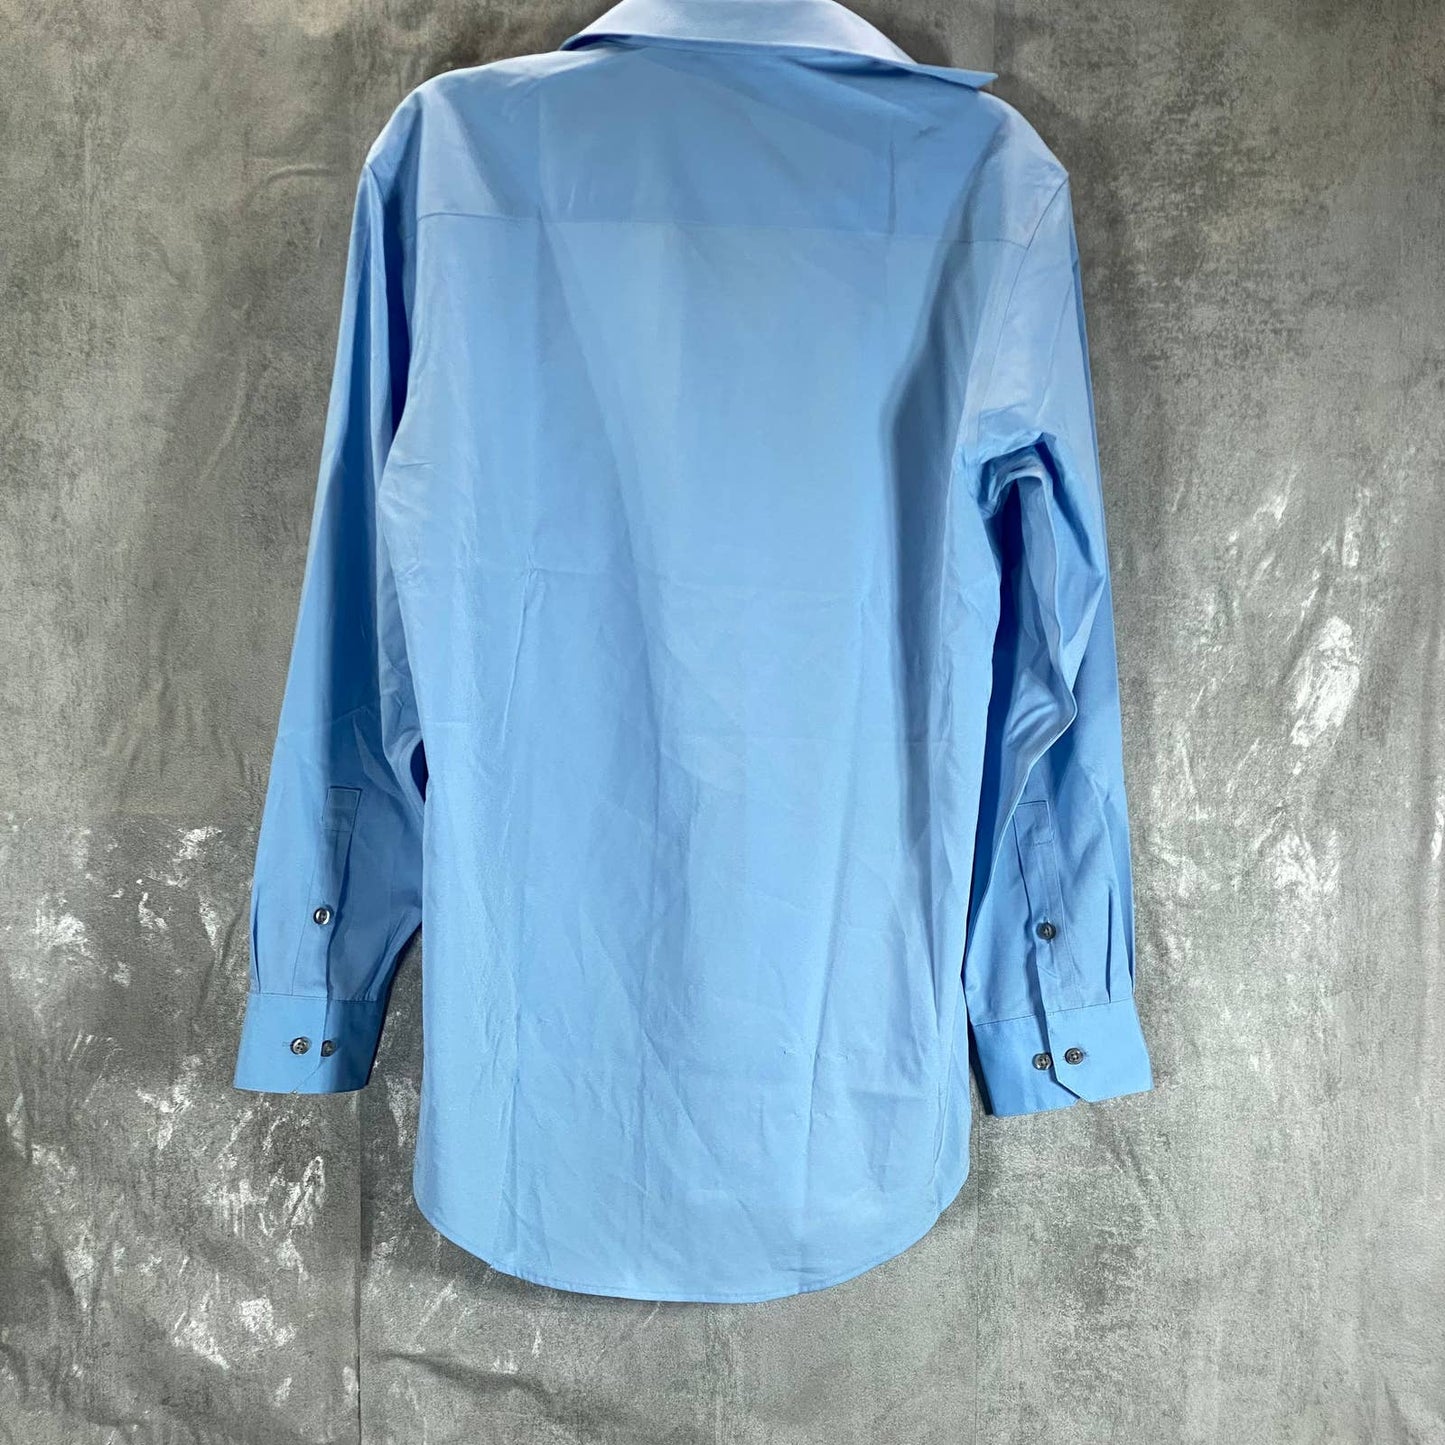 ALFANI Men's Light Blue Stretch Regular-Fit Button-Up Solid Shirt SZ S